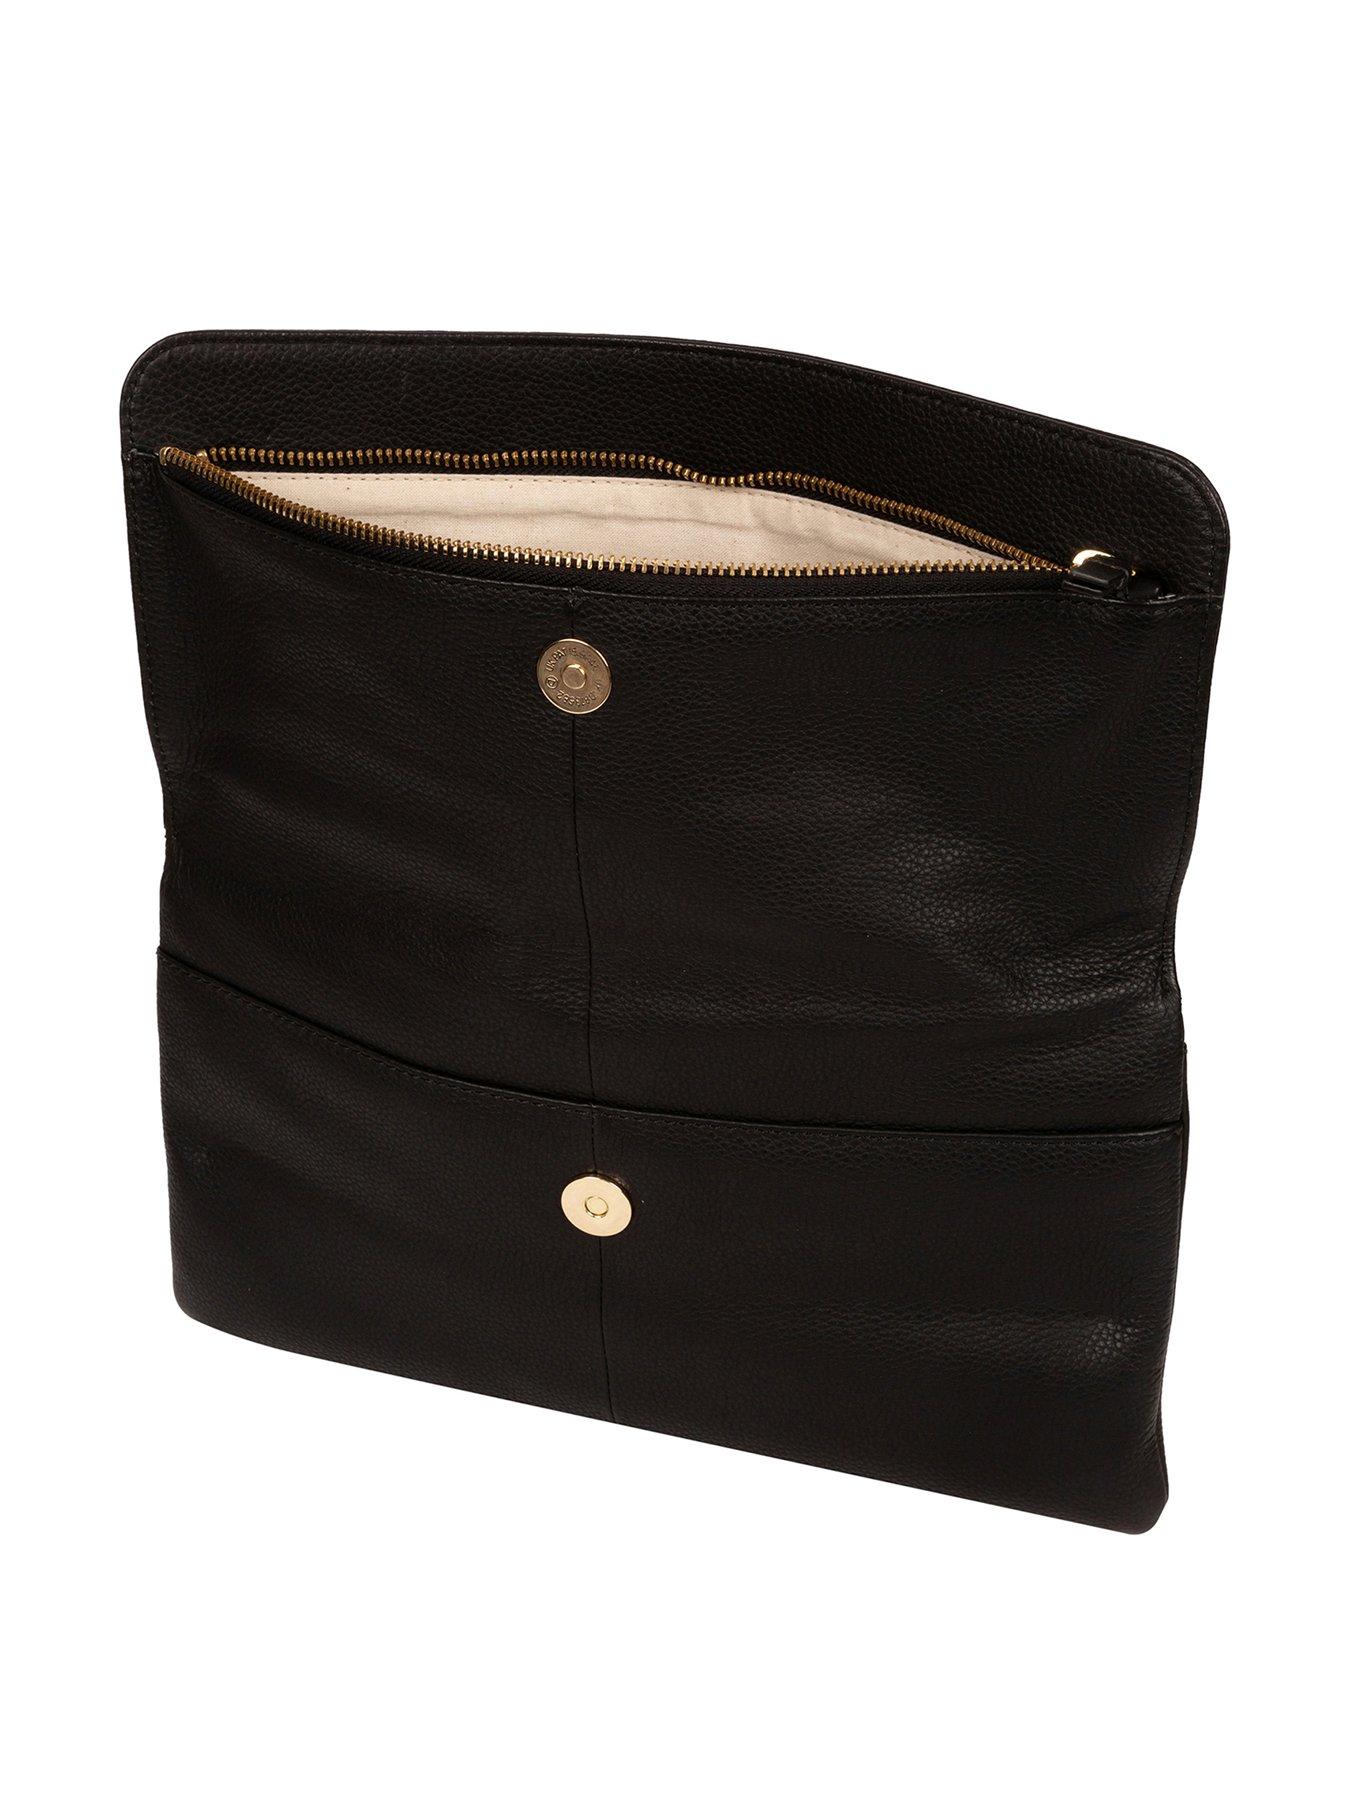 Bags & Purses Golders Leather Flap Over Clutch Bag - Black